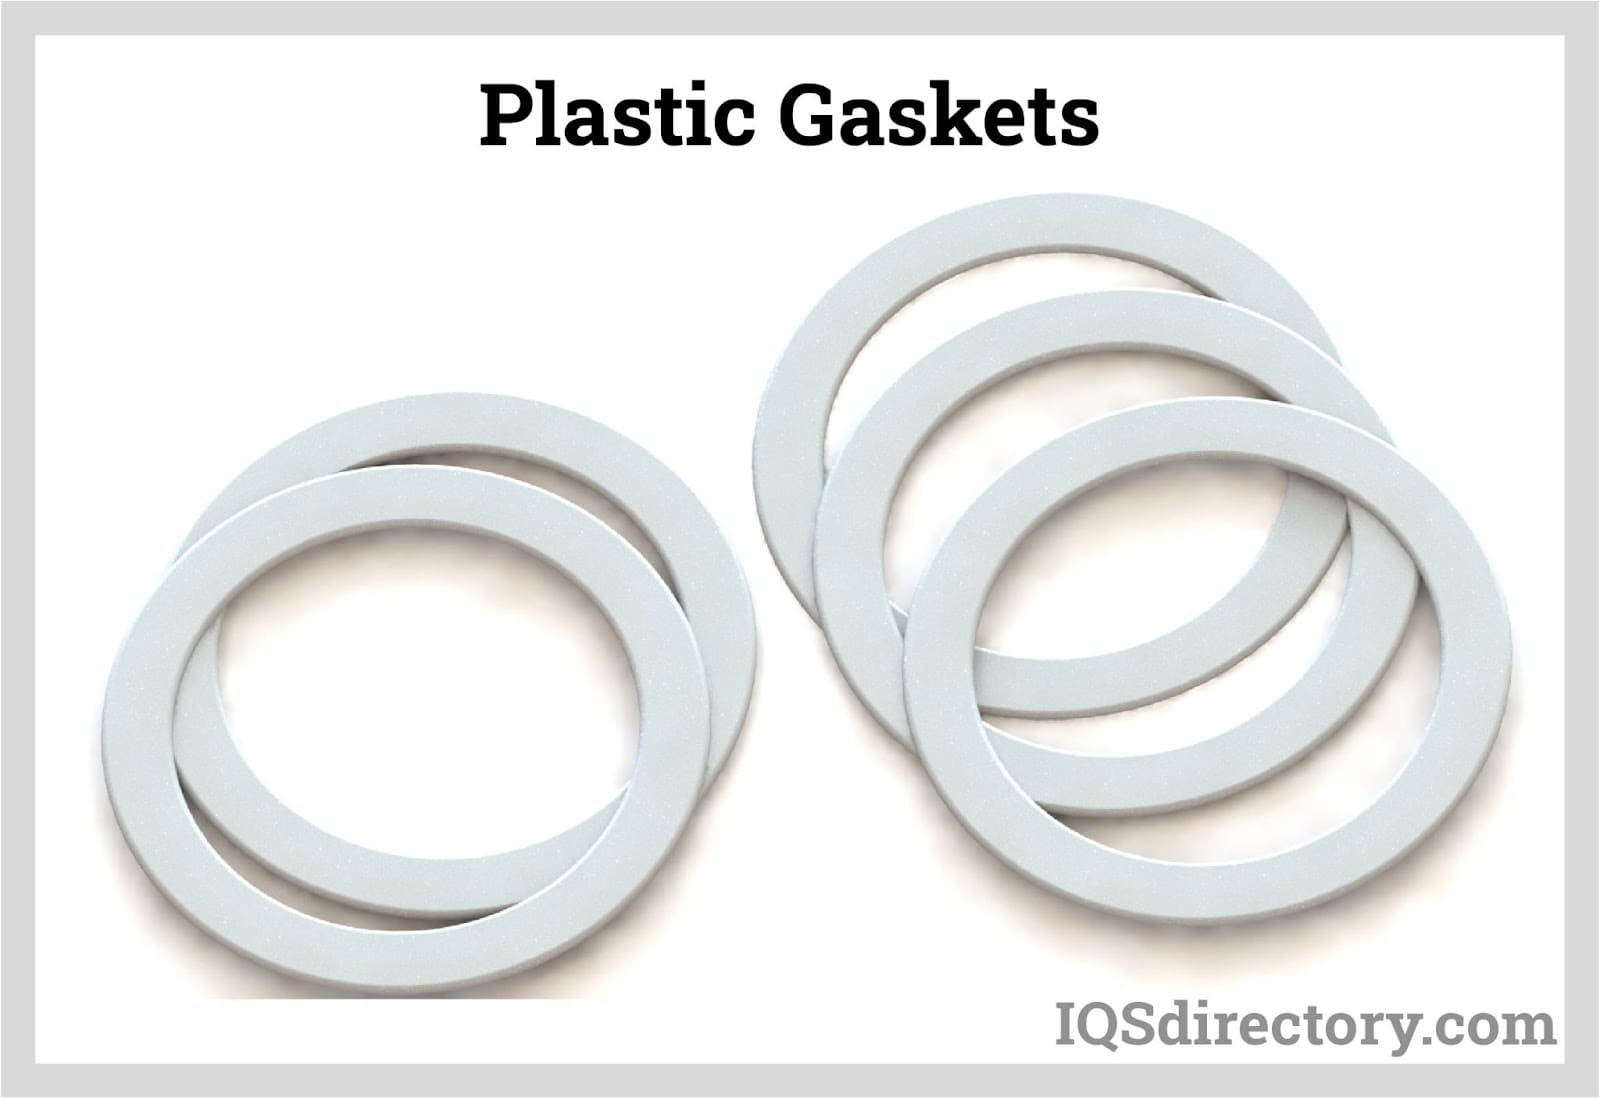 Plastic Gaskets